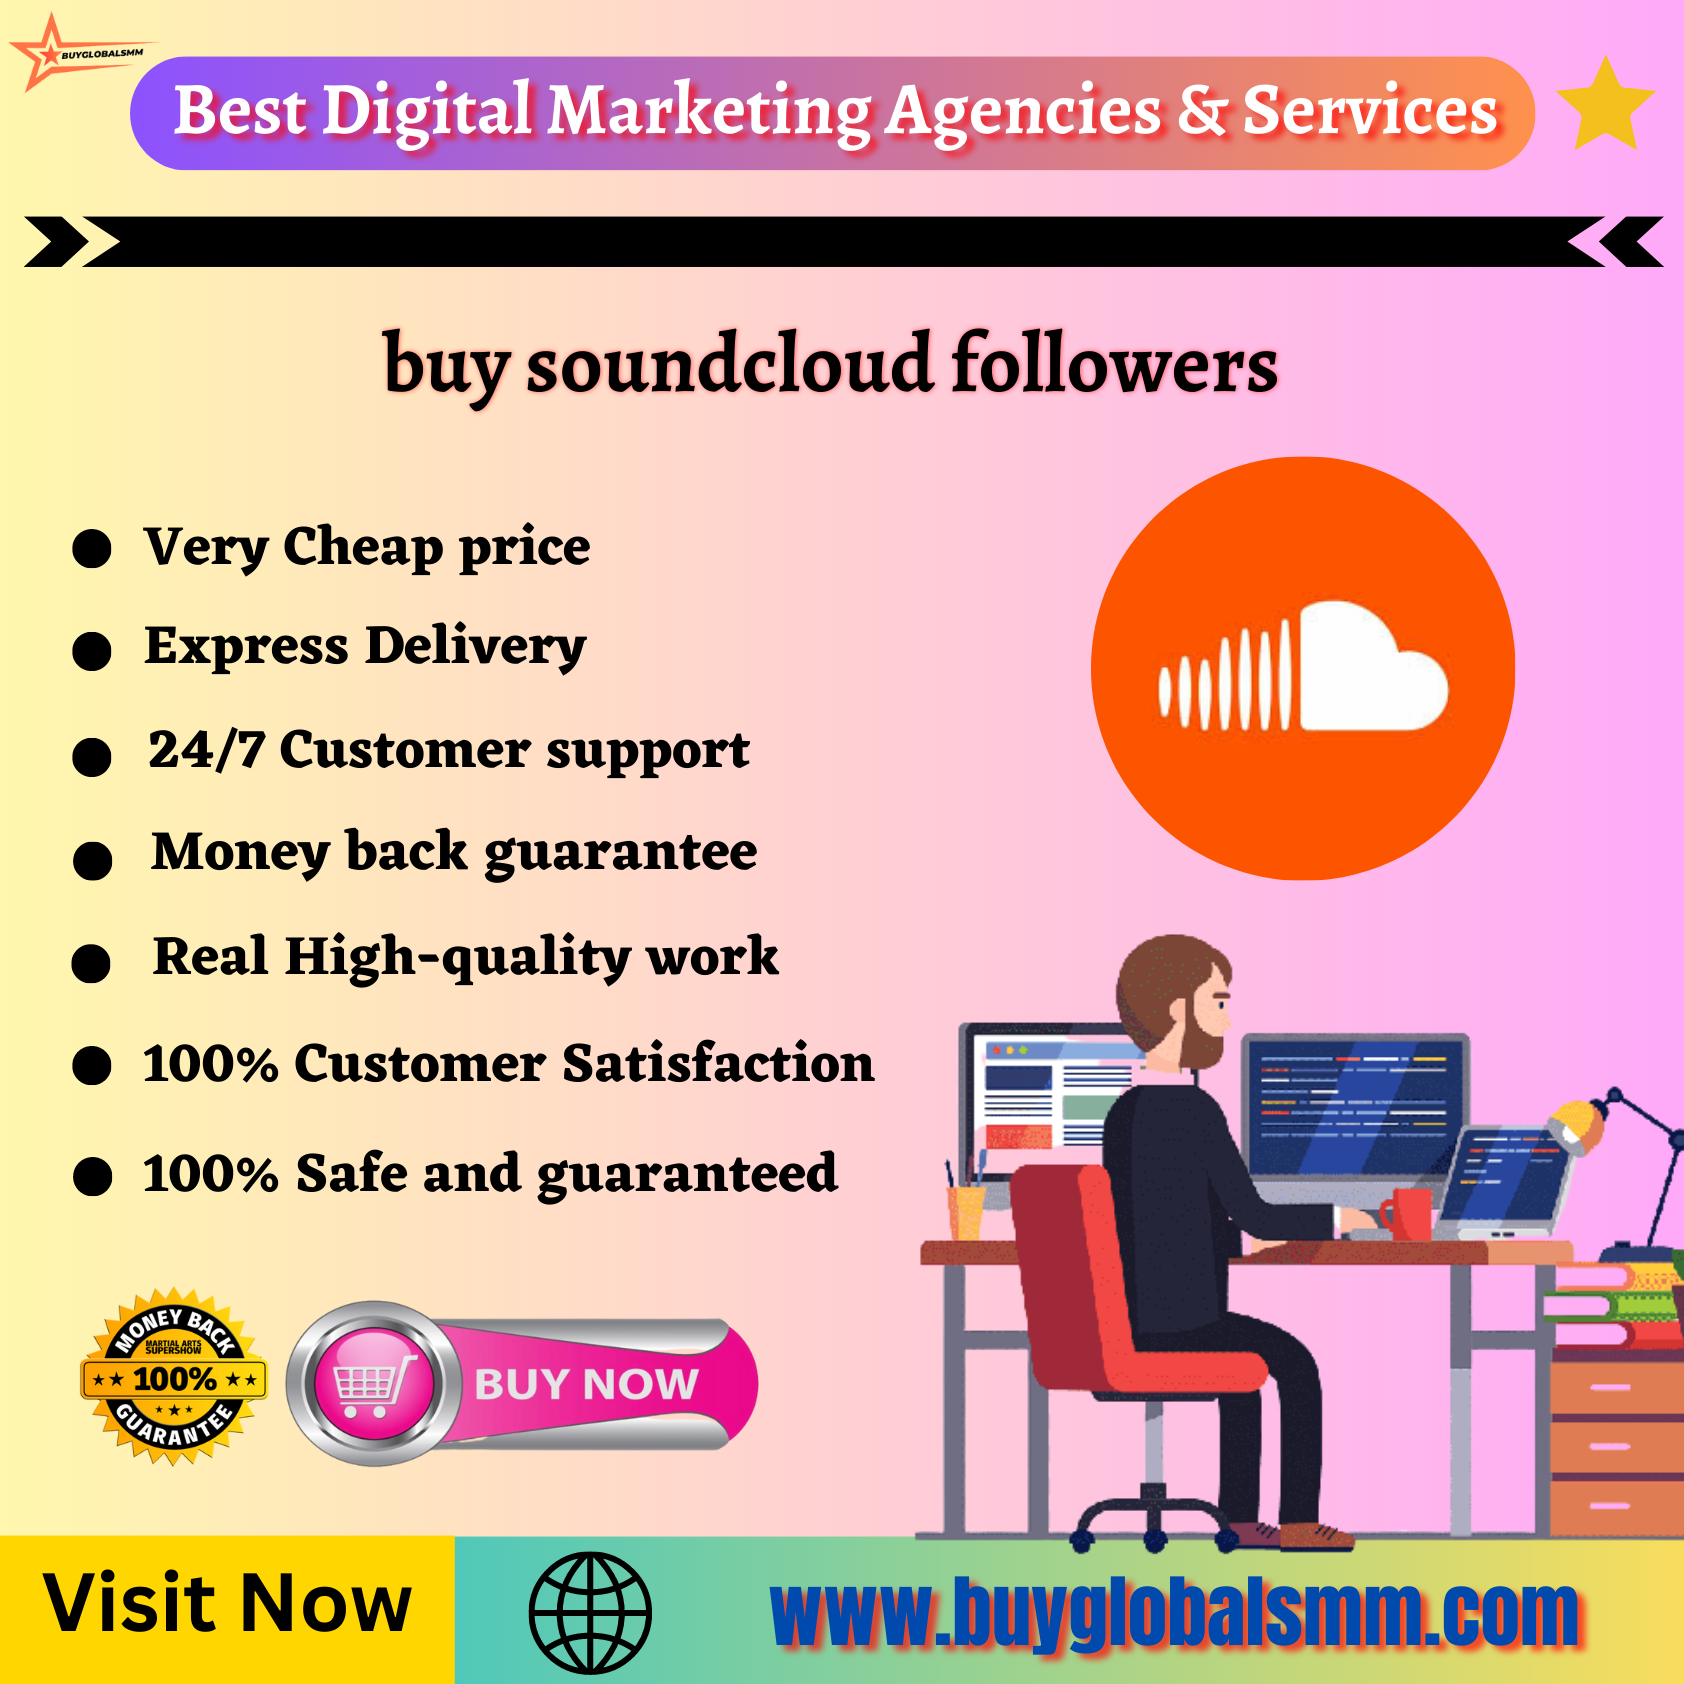 buy soundcloud followers -